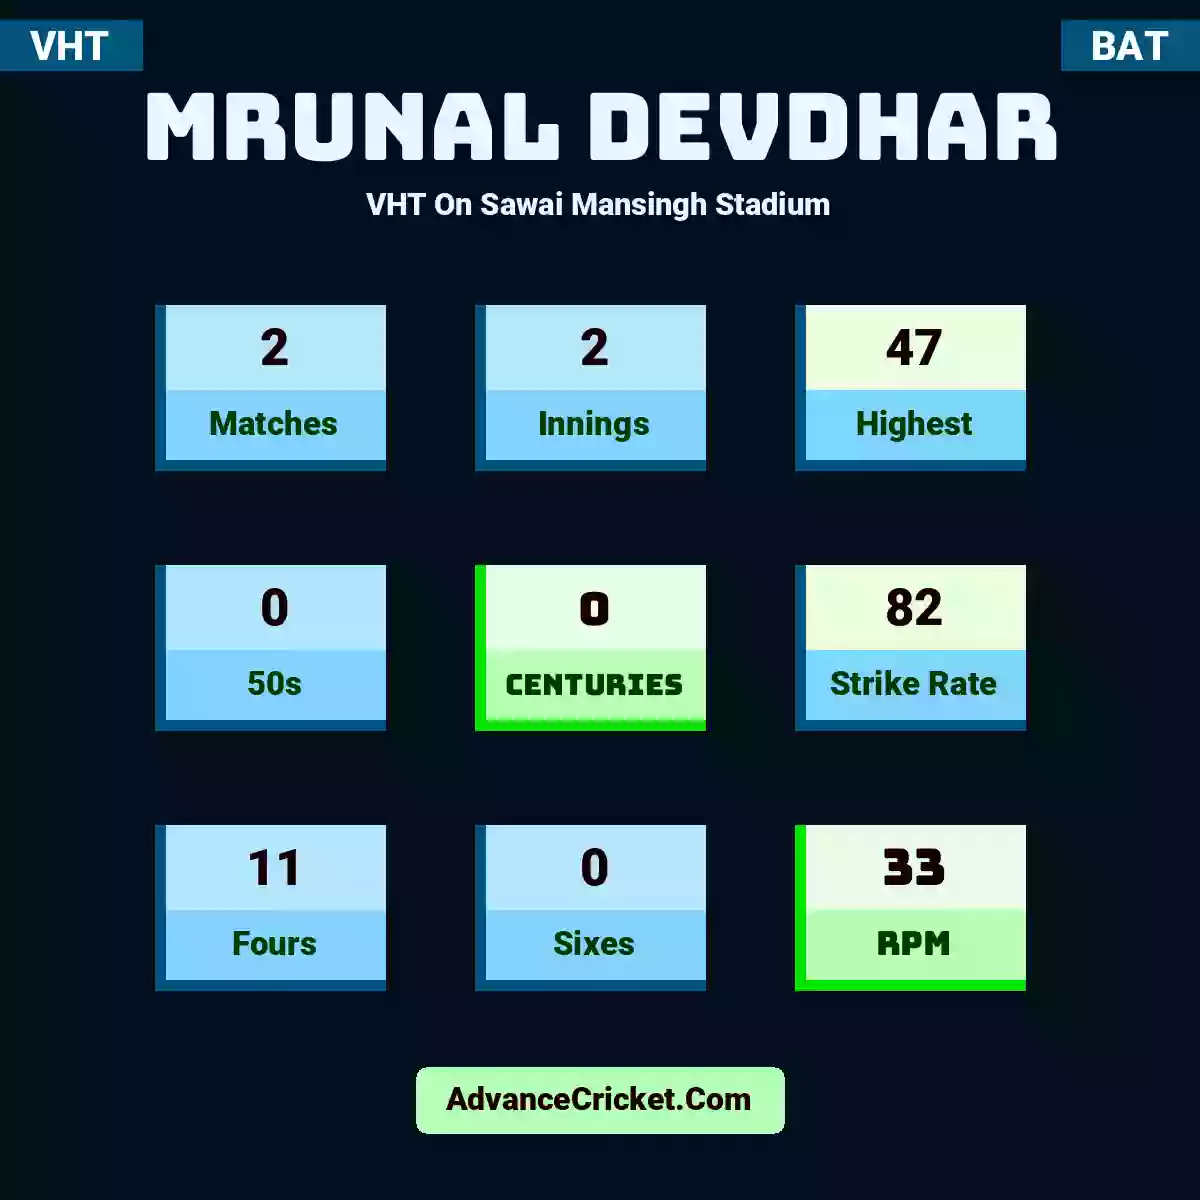 Mrunal Devdhar VHT  On Sawai Mansingh Stadium, Mrunal Devdhar played 2 matches, scored 47 runs as highest, 0 half-centuries, and 0 centuries, with a strike rate of 82. M.Devdhar hit 11 fours and 0 sixes, with an RPM of 33.